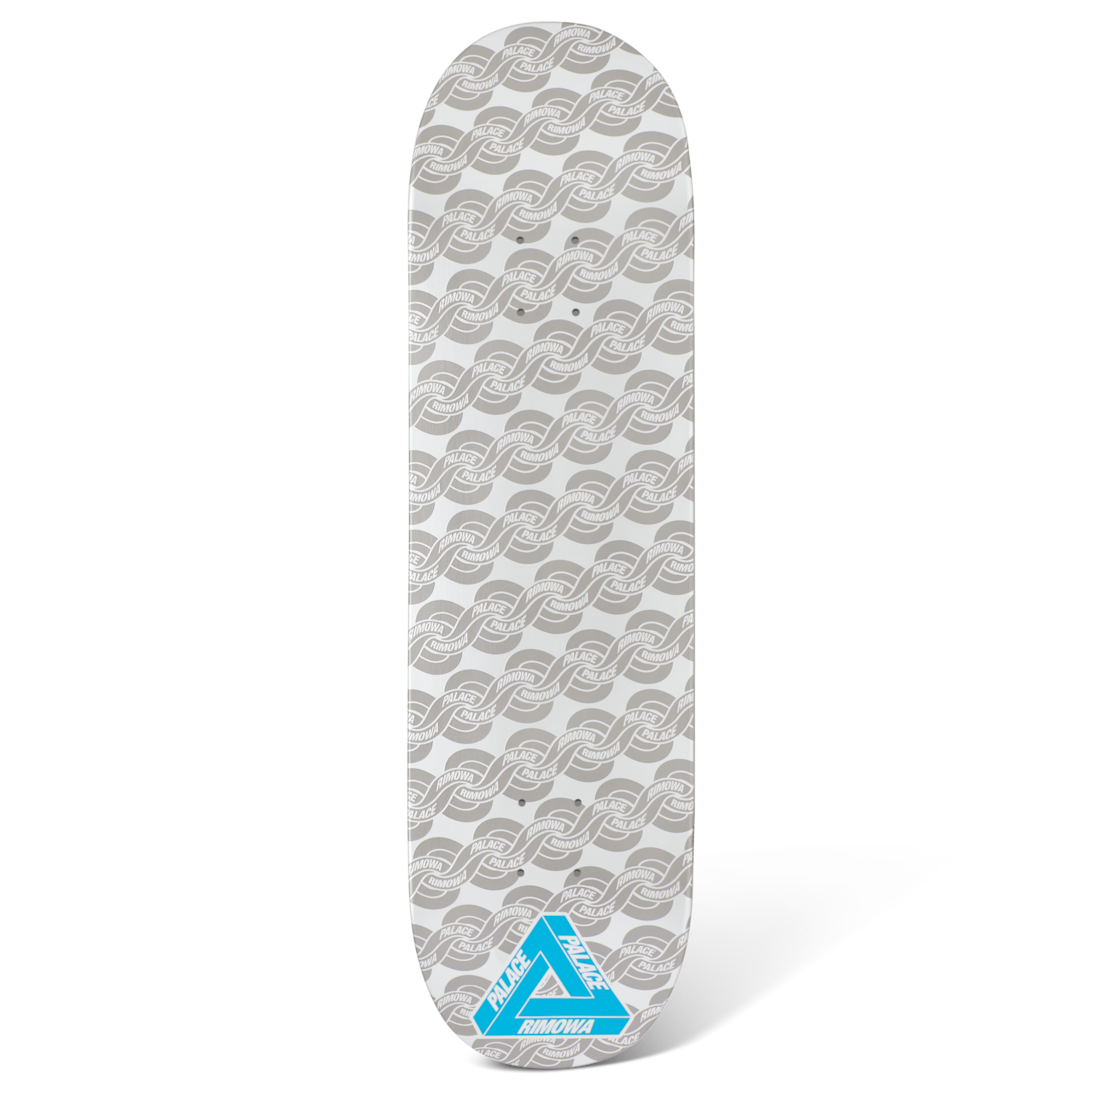 RIMOWA x PALACE Customisable Skateboard Deck Infinity | RIMOWA